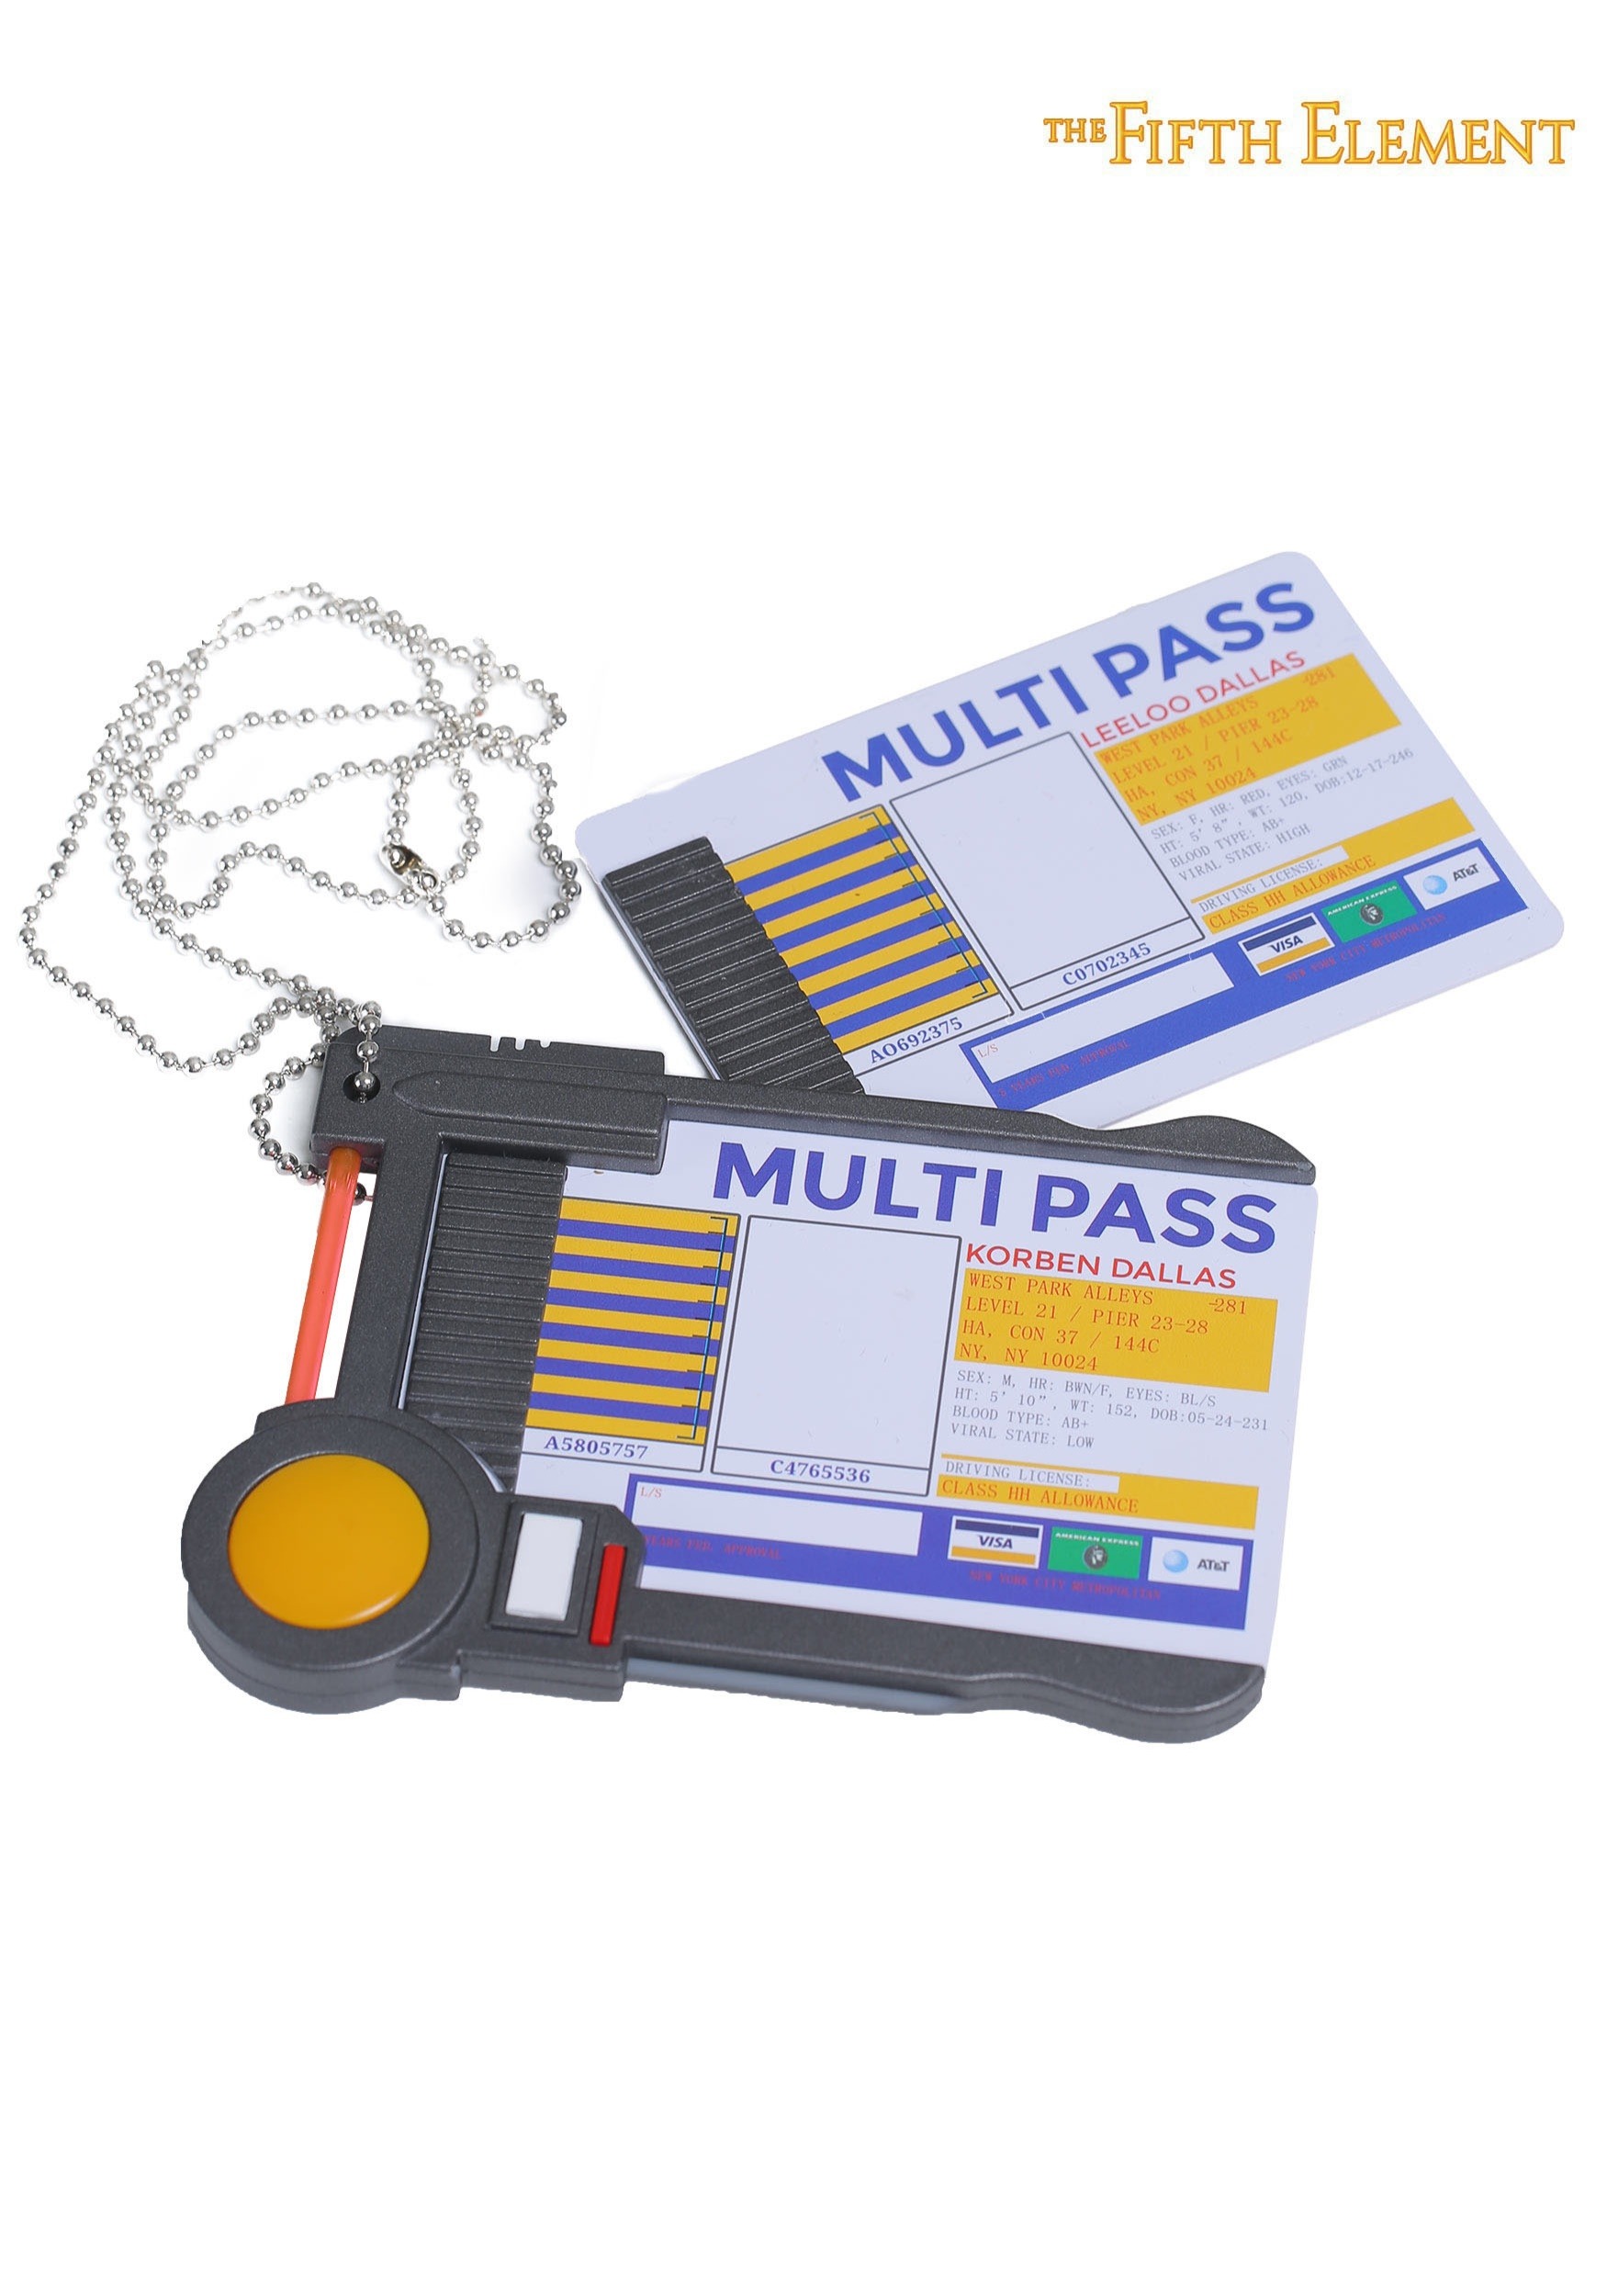 Fifth Element Leeloo Dallas Multi Pass Multipass prop replica ID Badge holder 